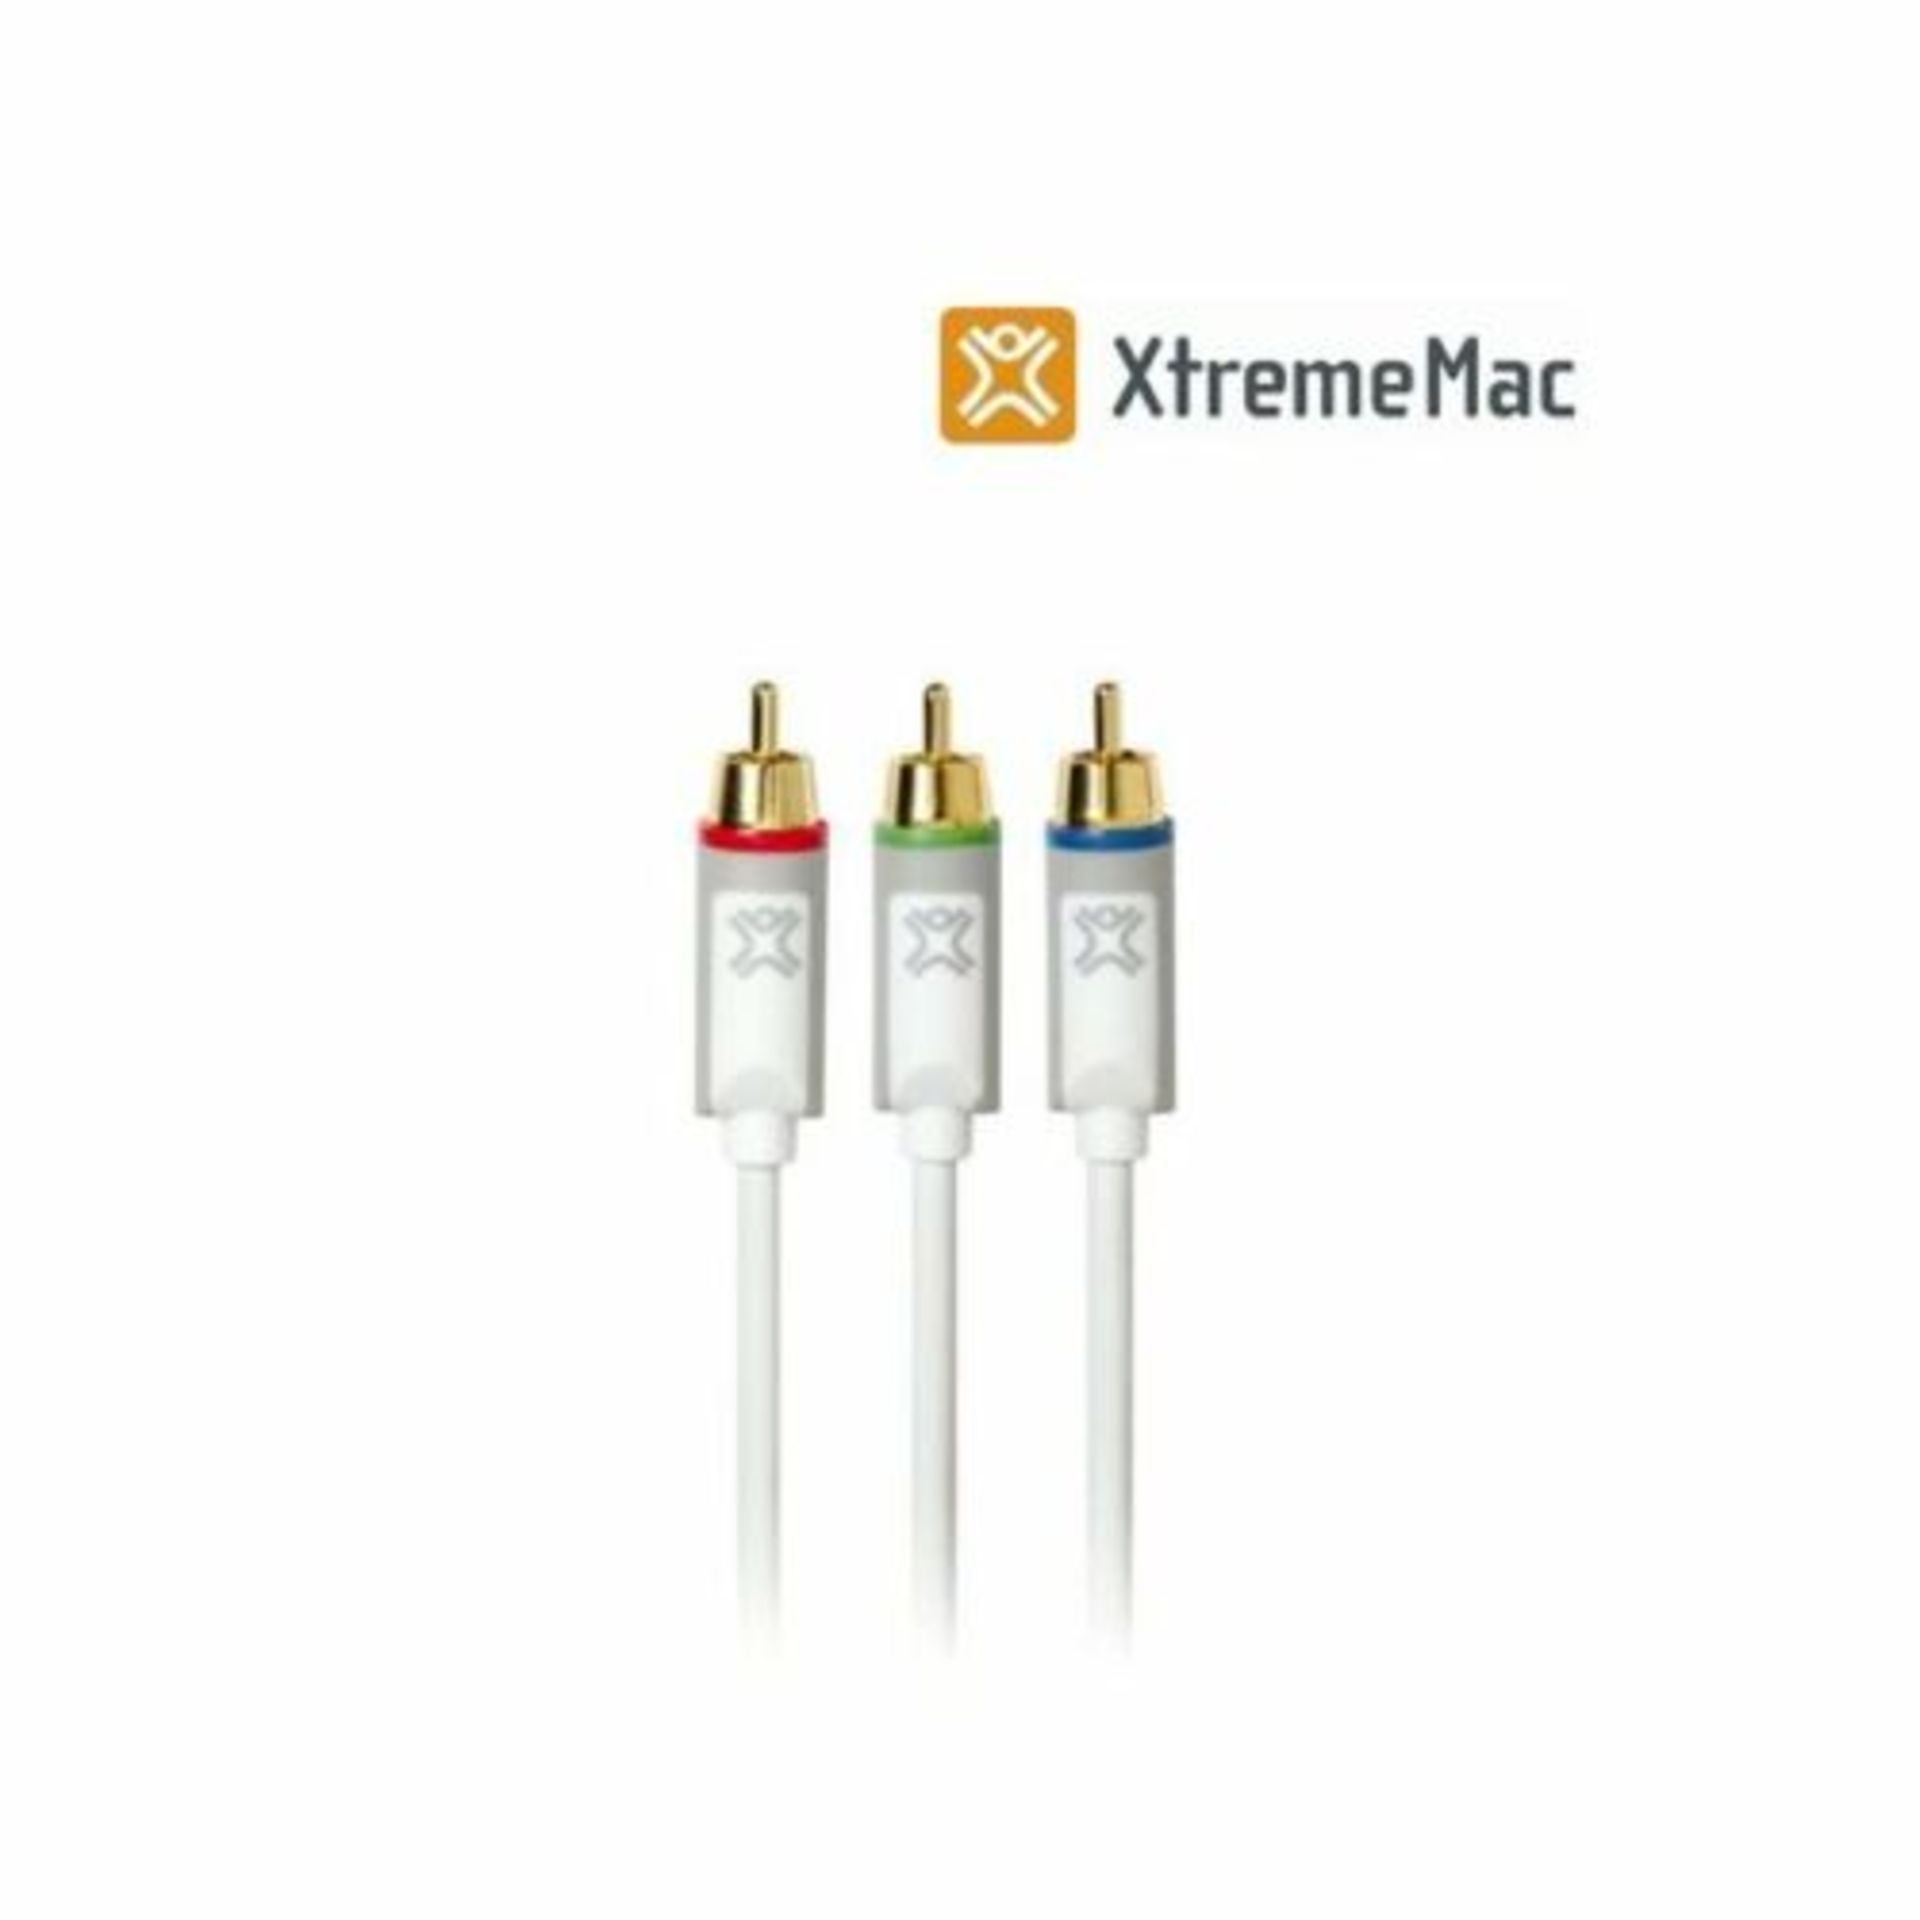 50 x XtremeHD Component Video Cable (4m) EU RCA Male Gold plated - Bild 3 aus 5